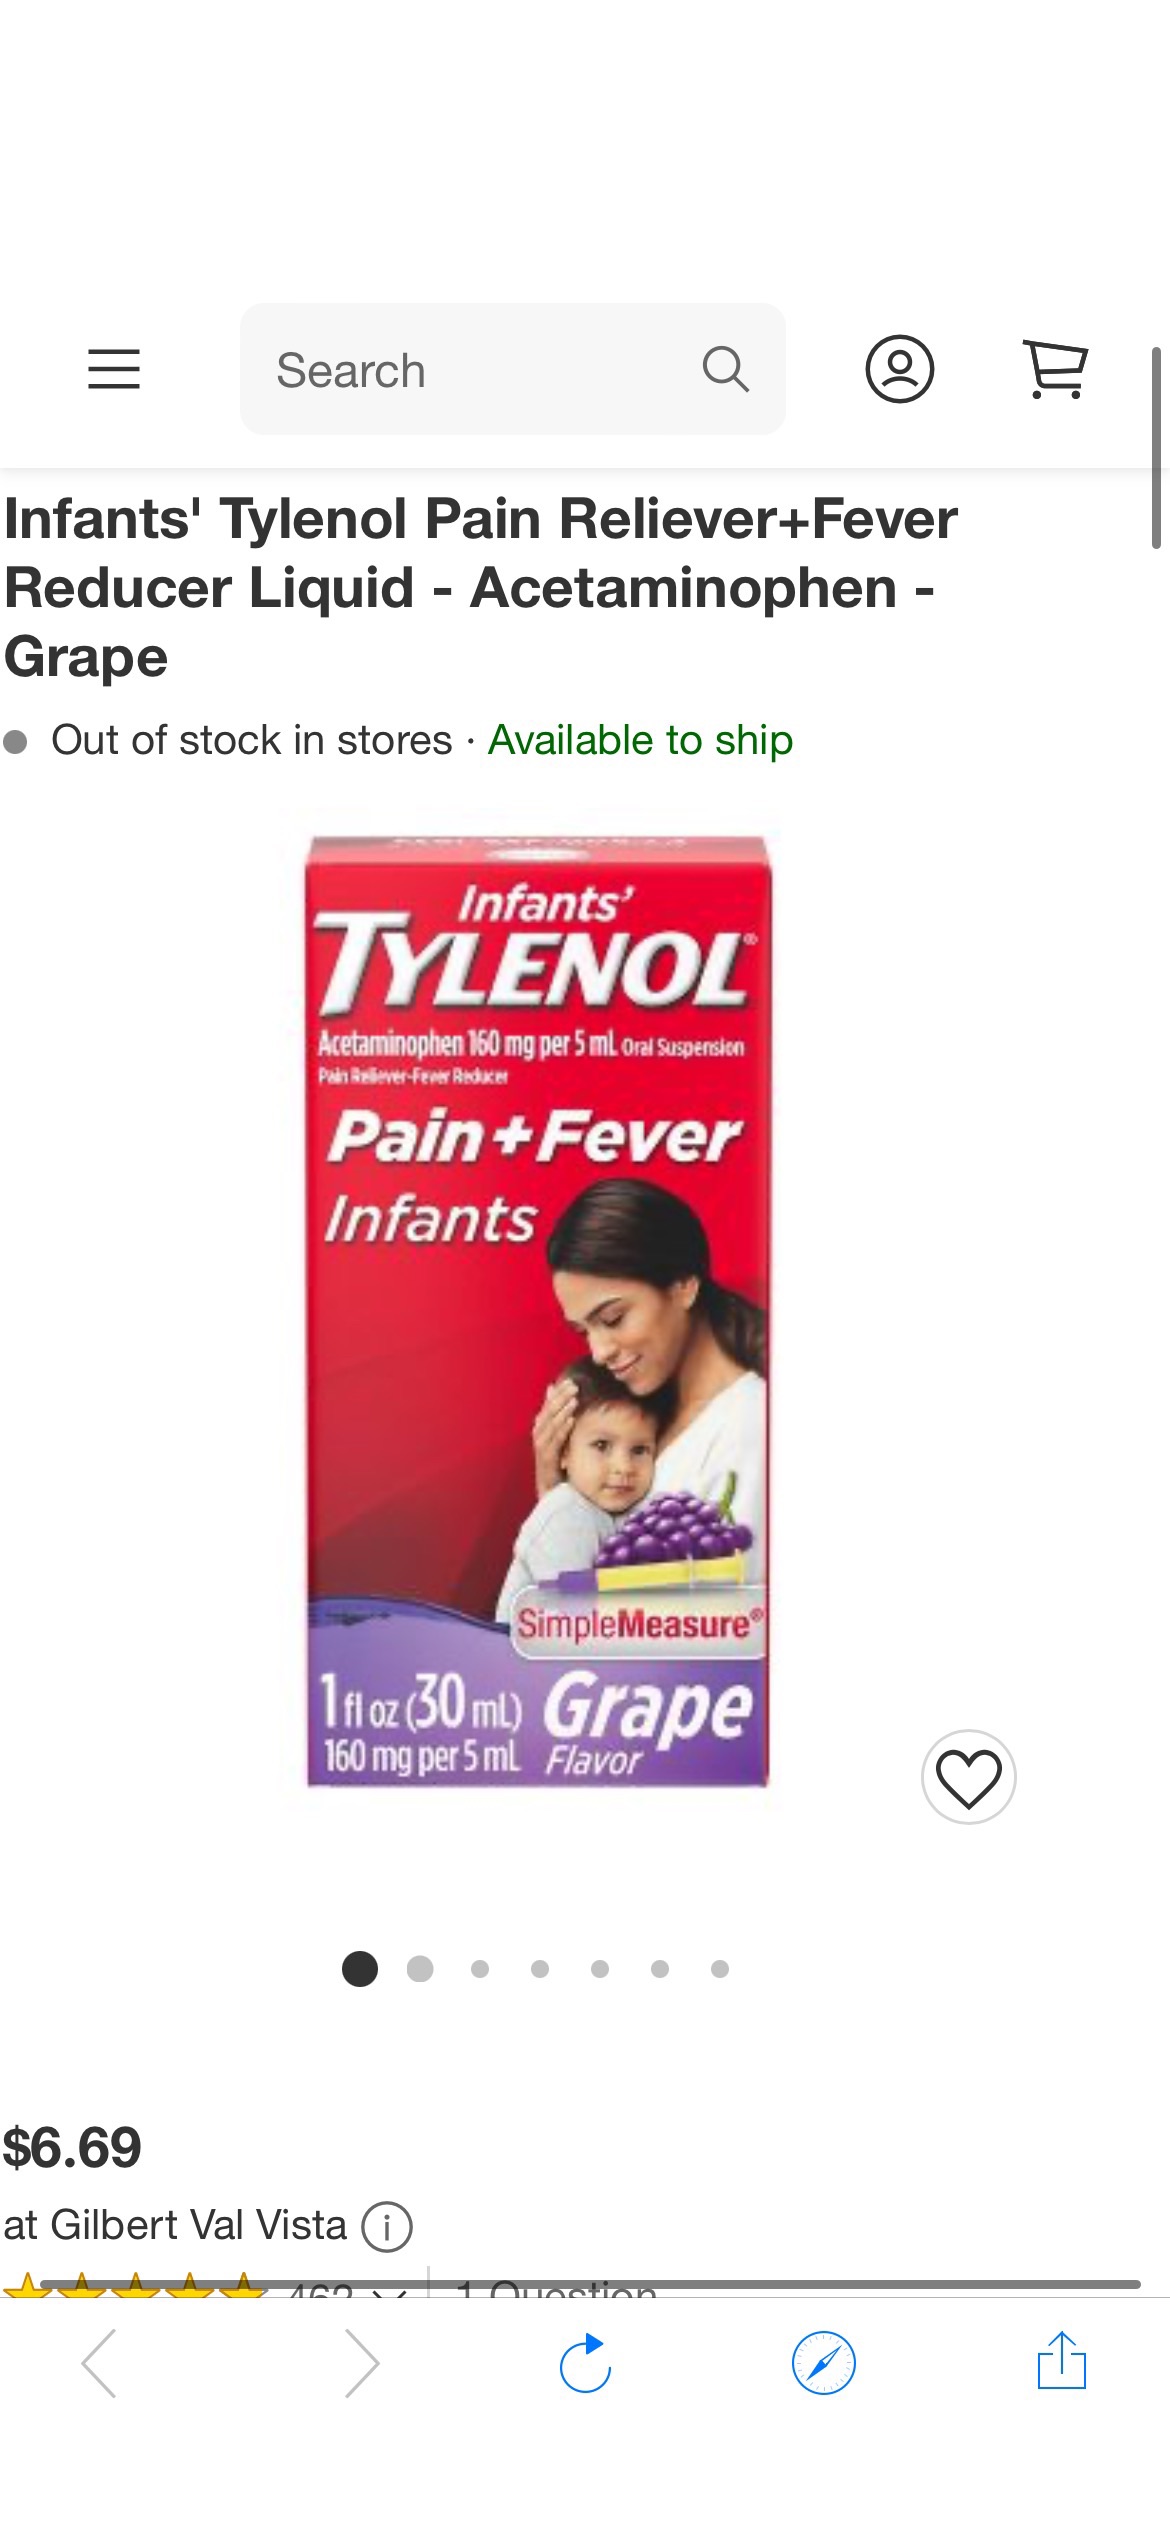 Infants' Tylenol Pain Reliever And Fever Reducer Liquid Drops - Acetaminophen - Grape - 1 Fl Oz : Target婴儿泰诺